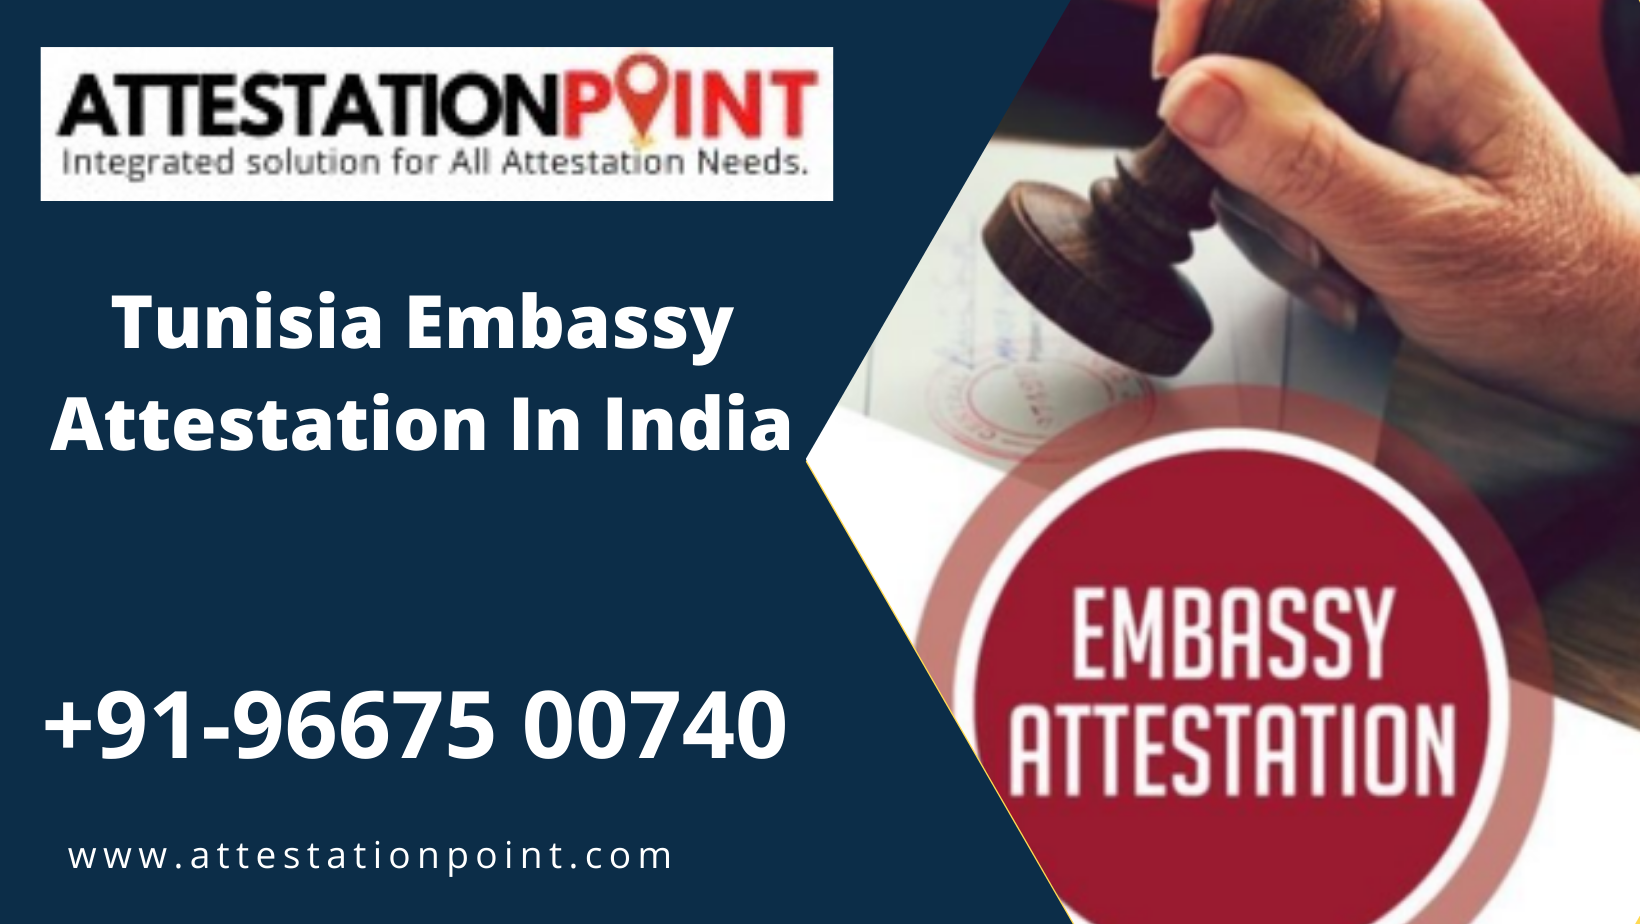 Tunisia Embassy Attestation In India